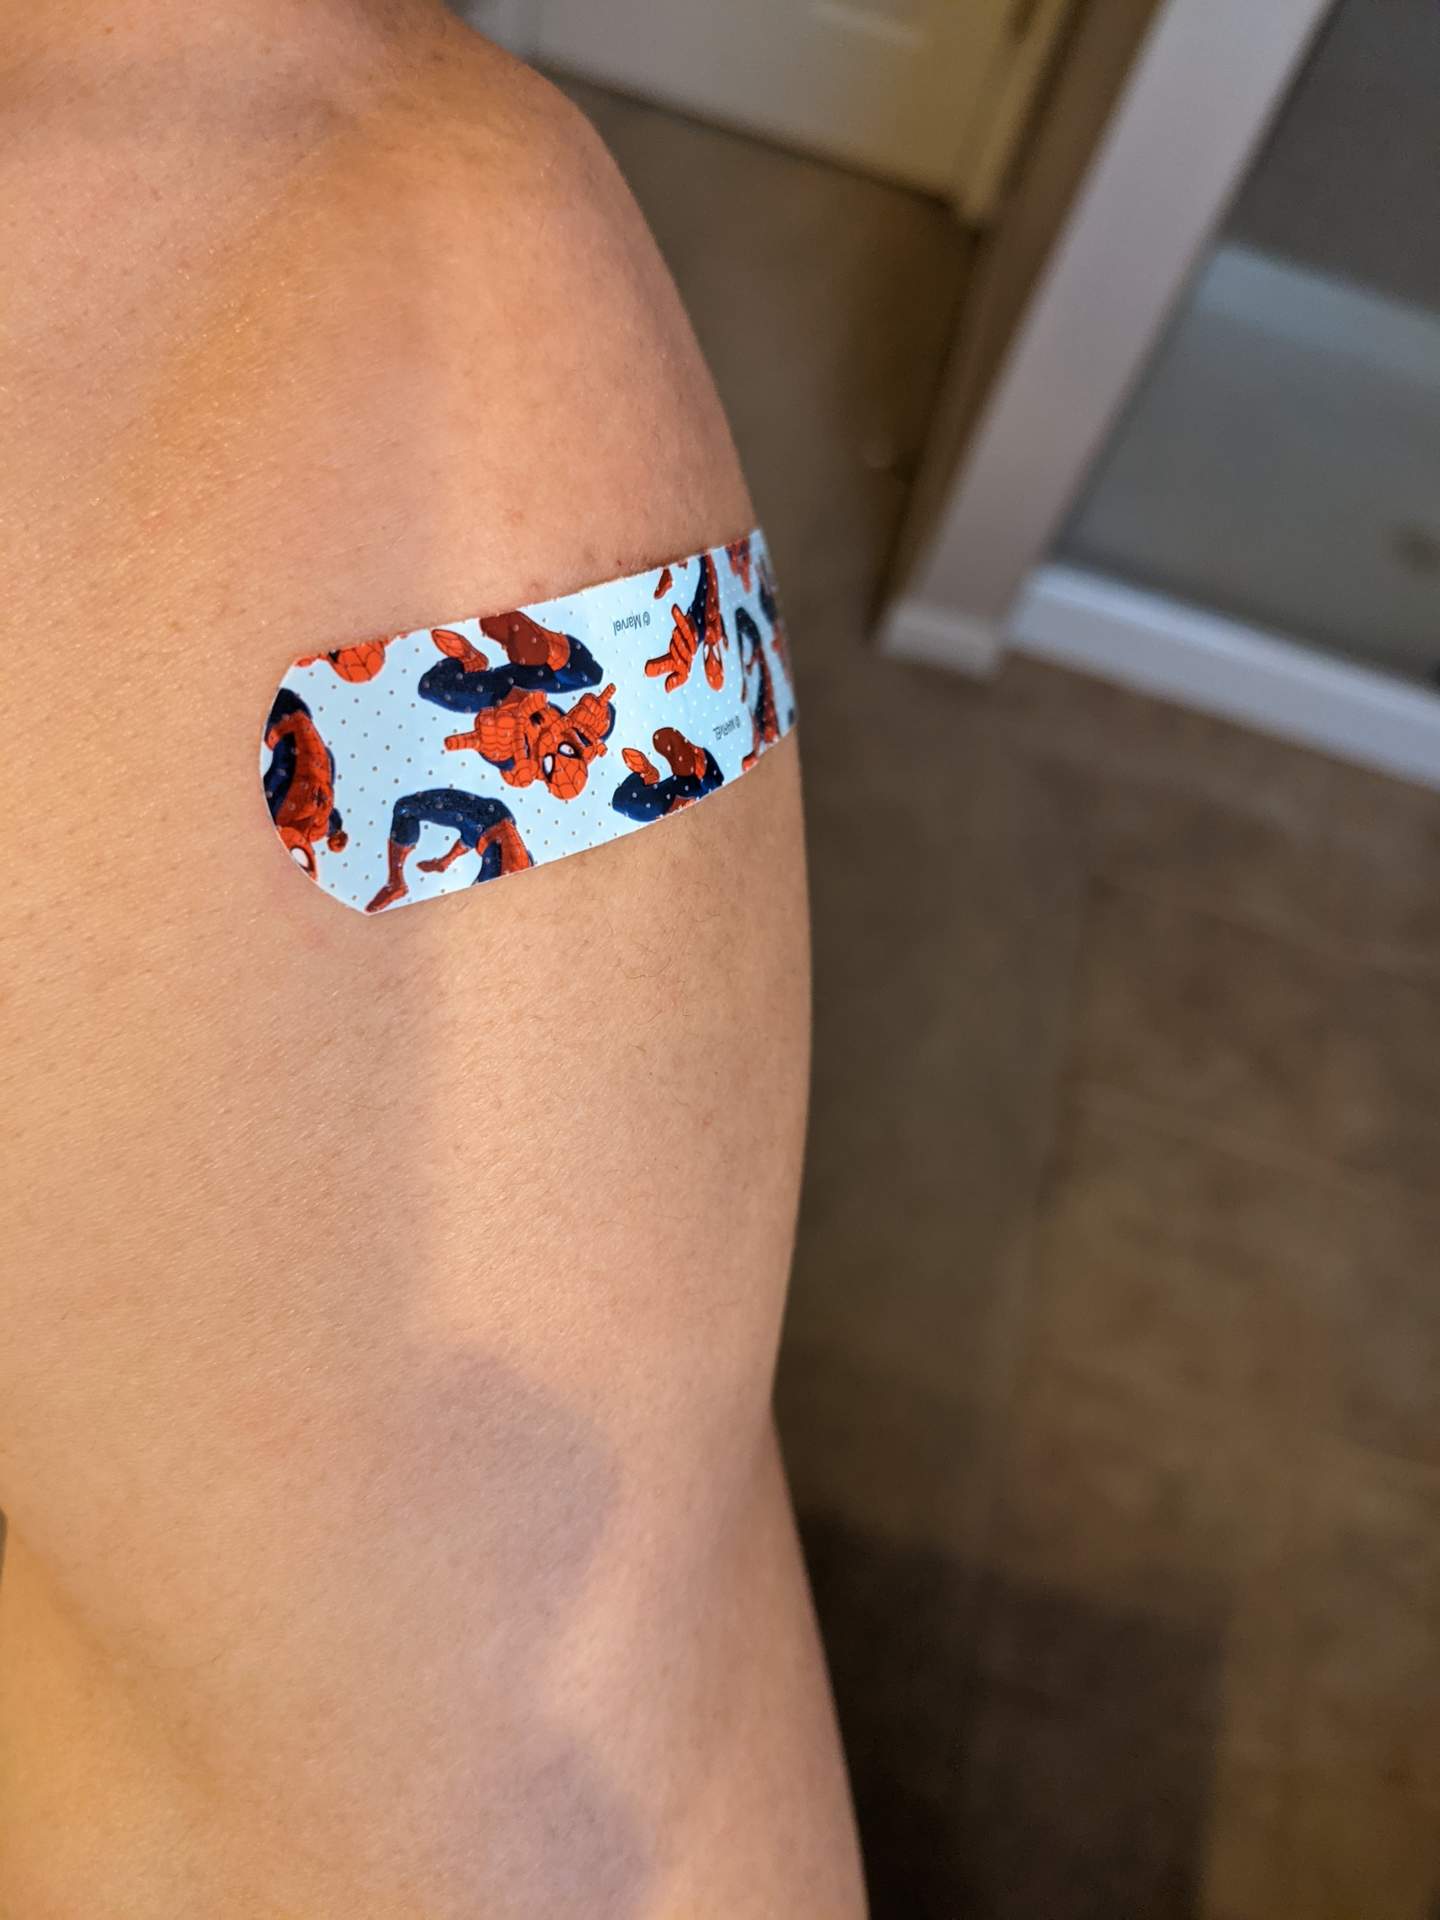 left arm with Spiderman bandage